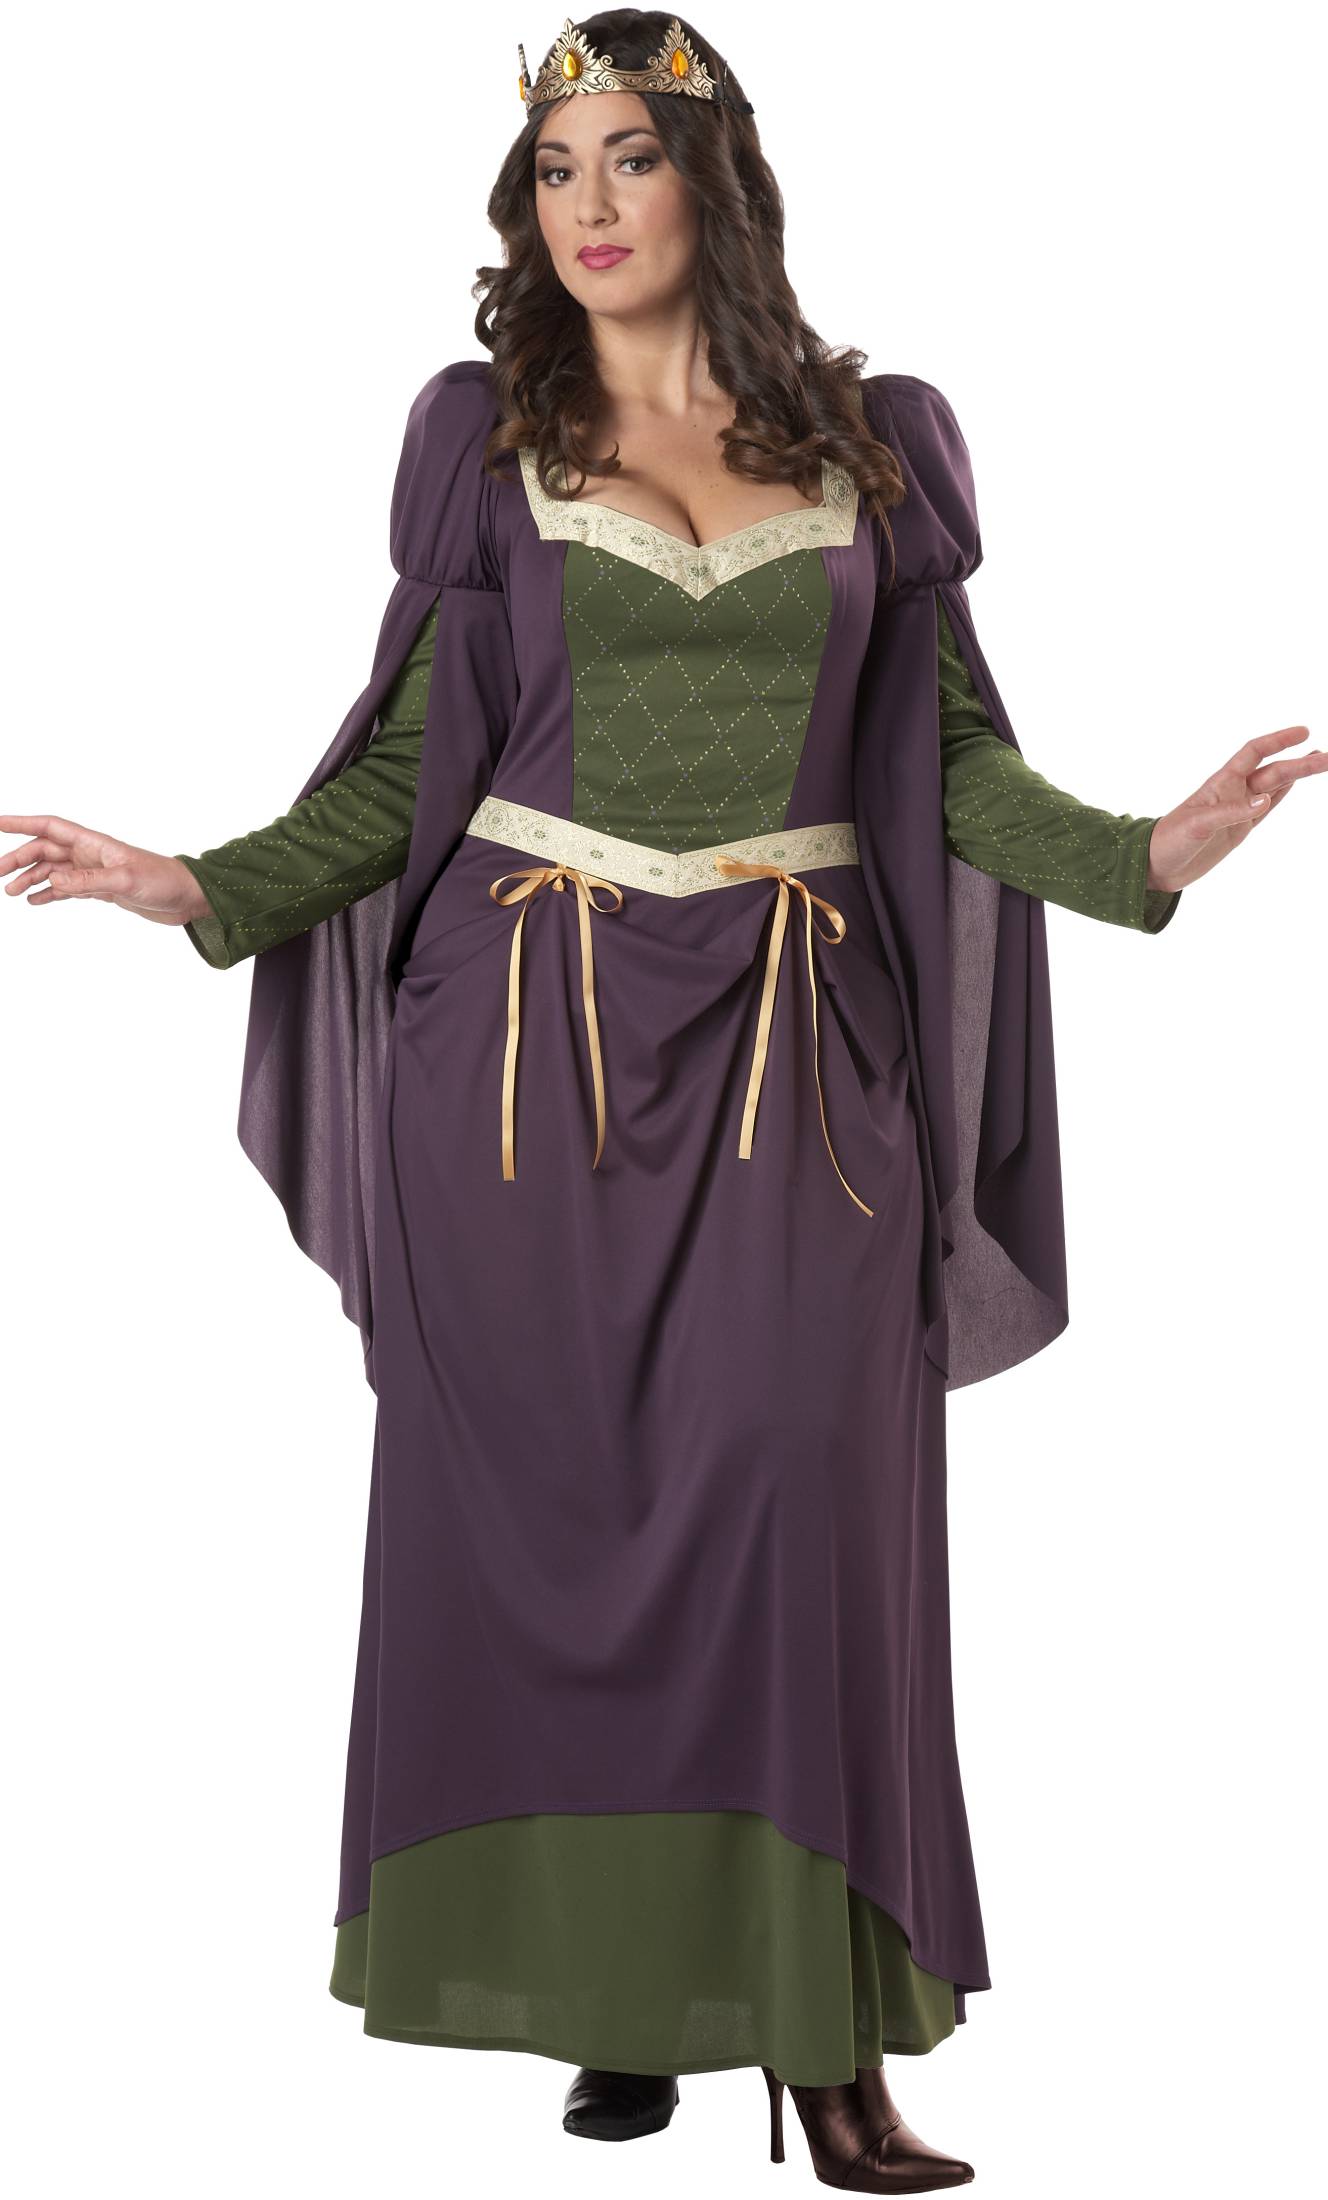 Costume médiévale femme grande taille xxl - xxxl